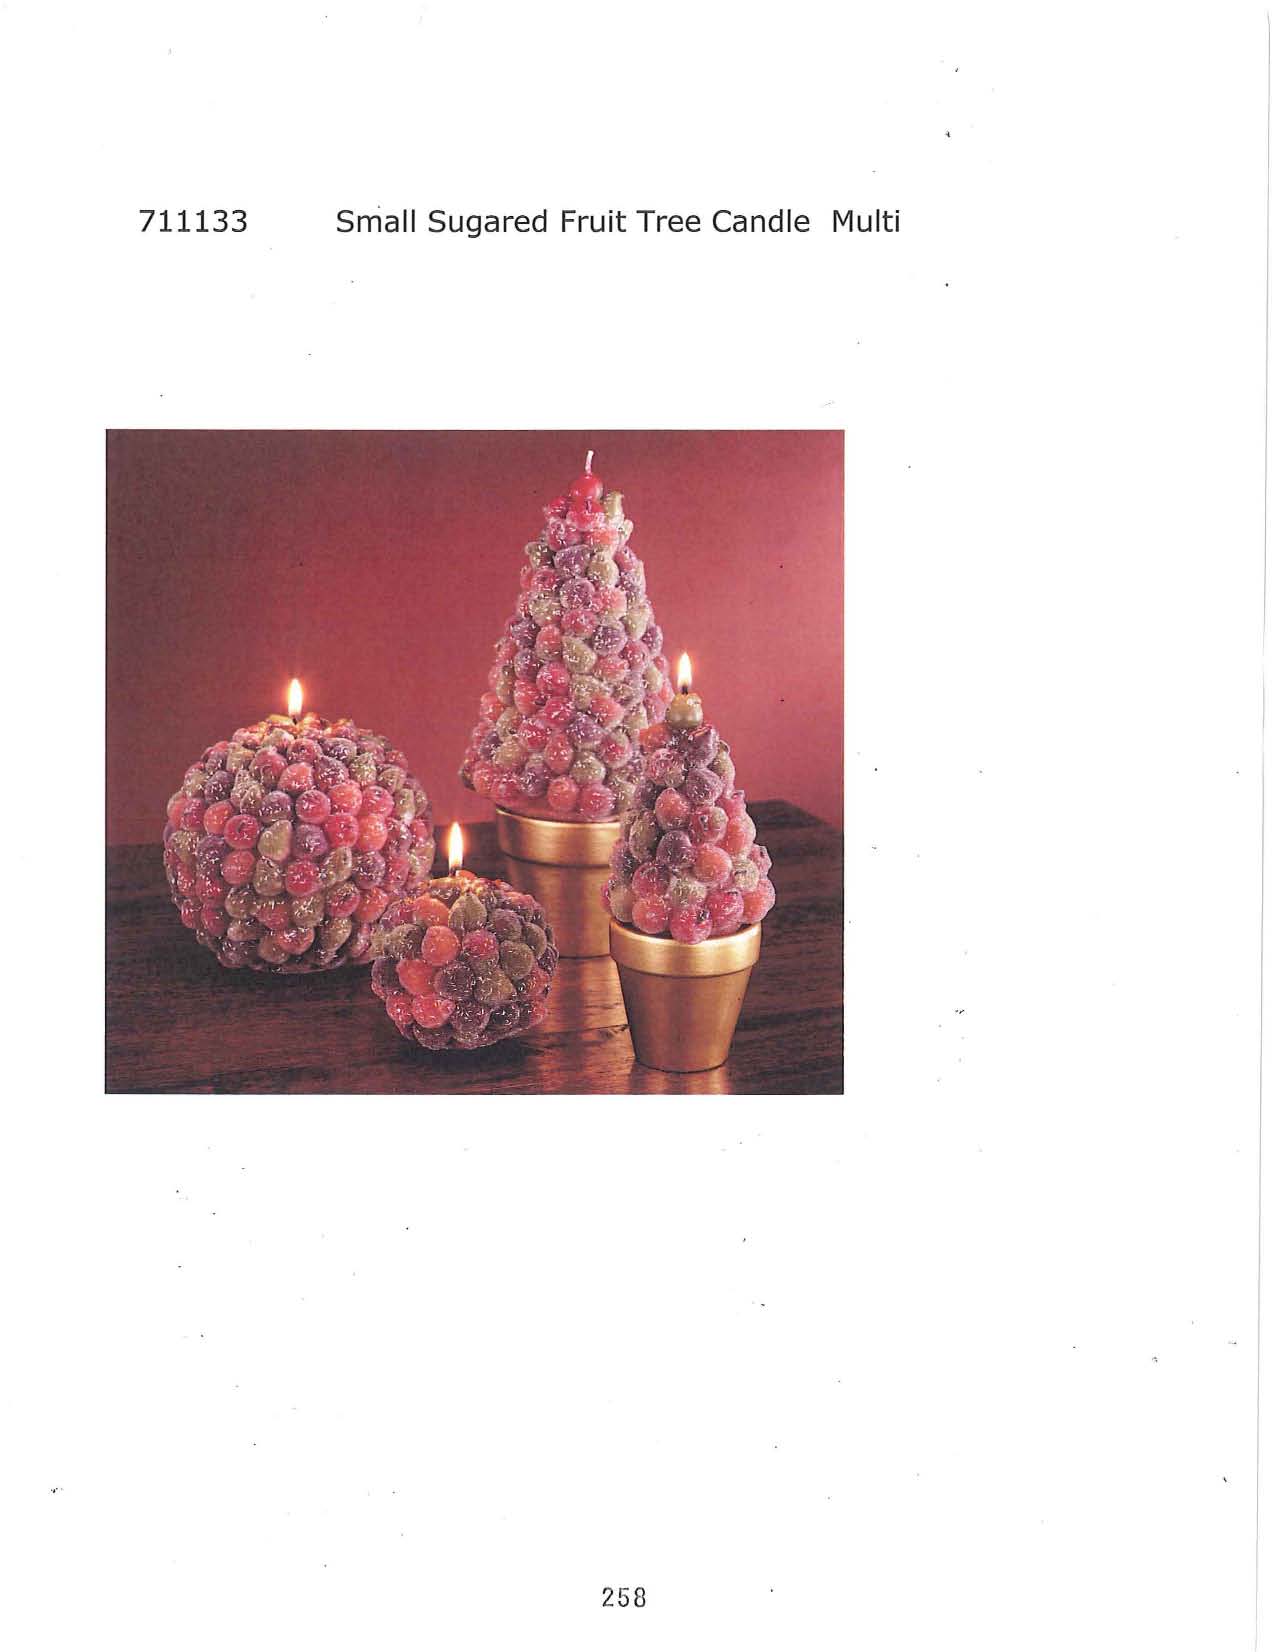 Small Sugared Fruit Tree Candle - Multi